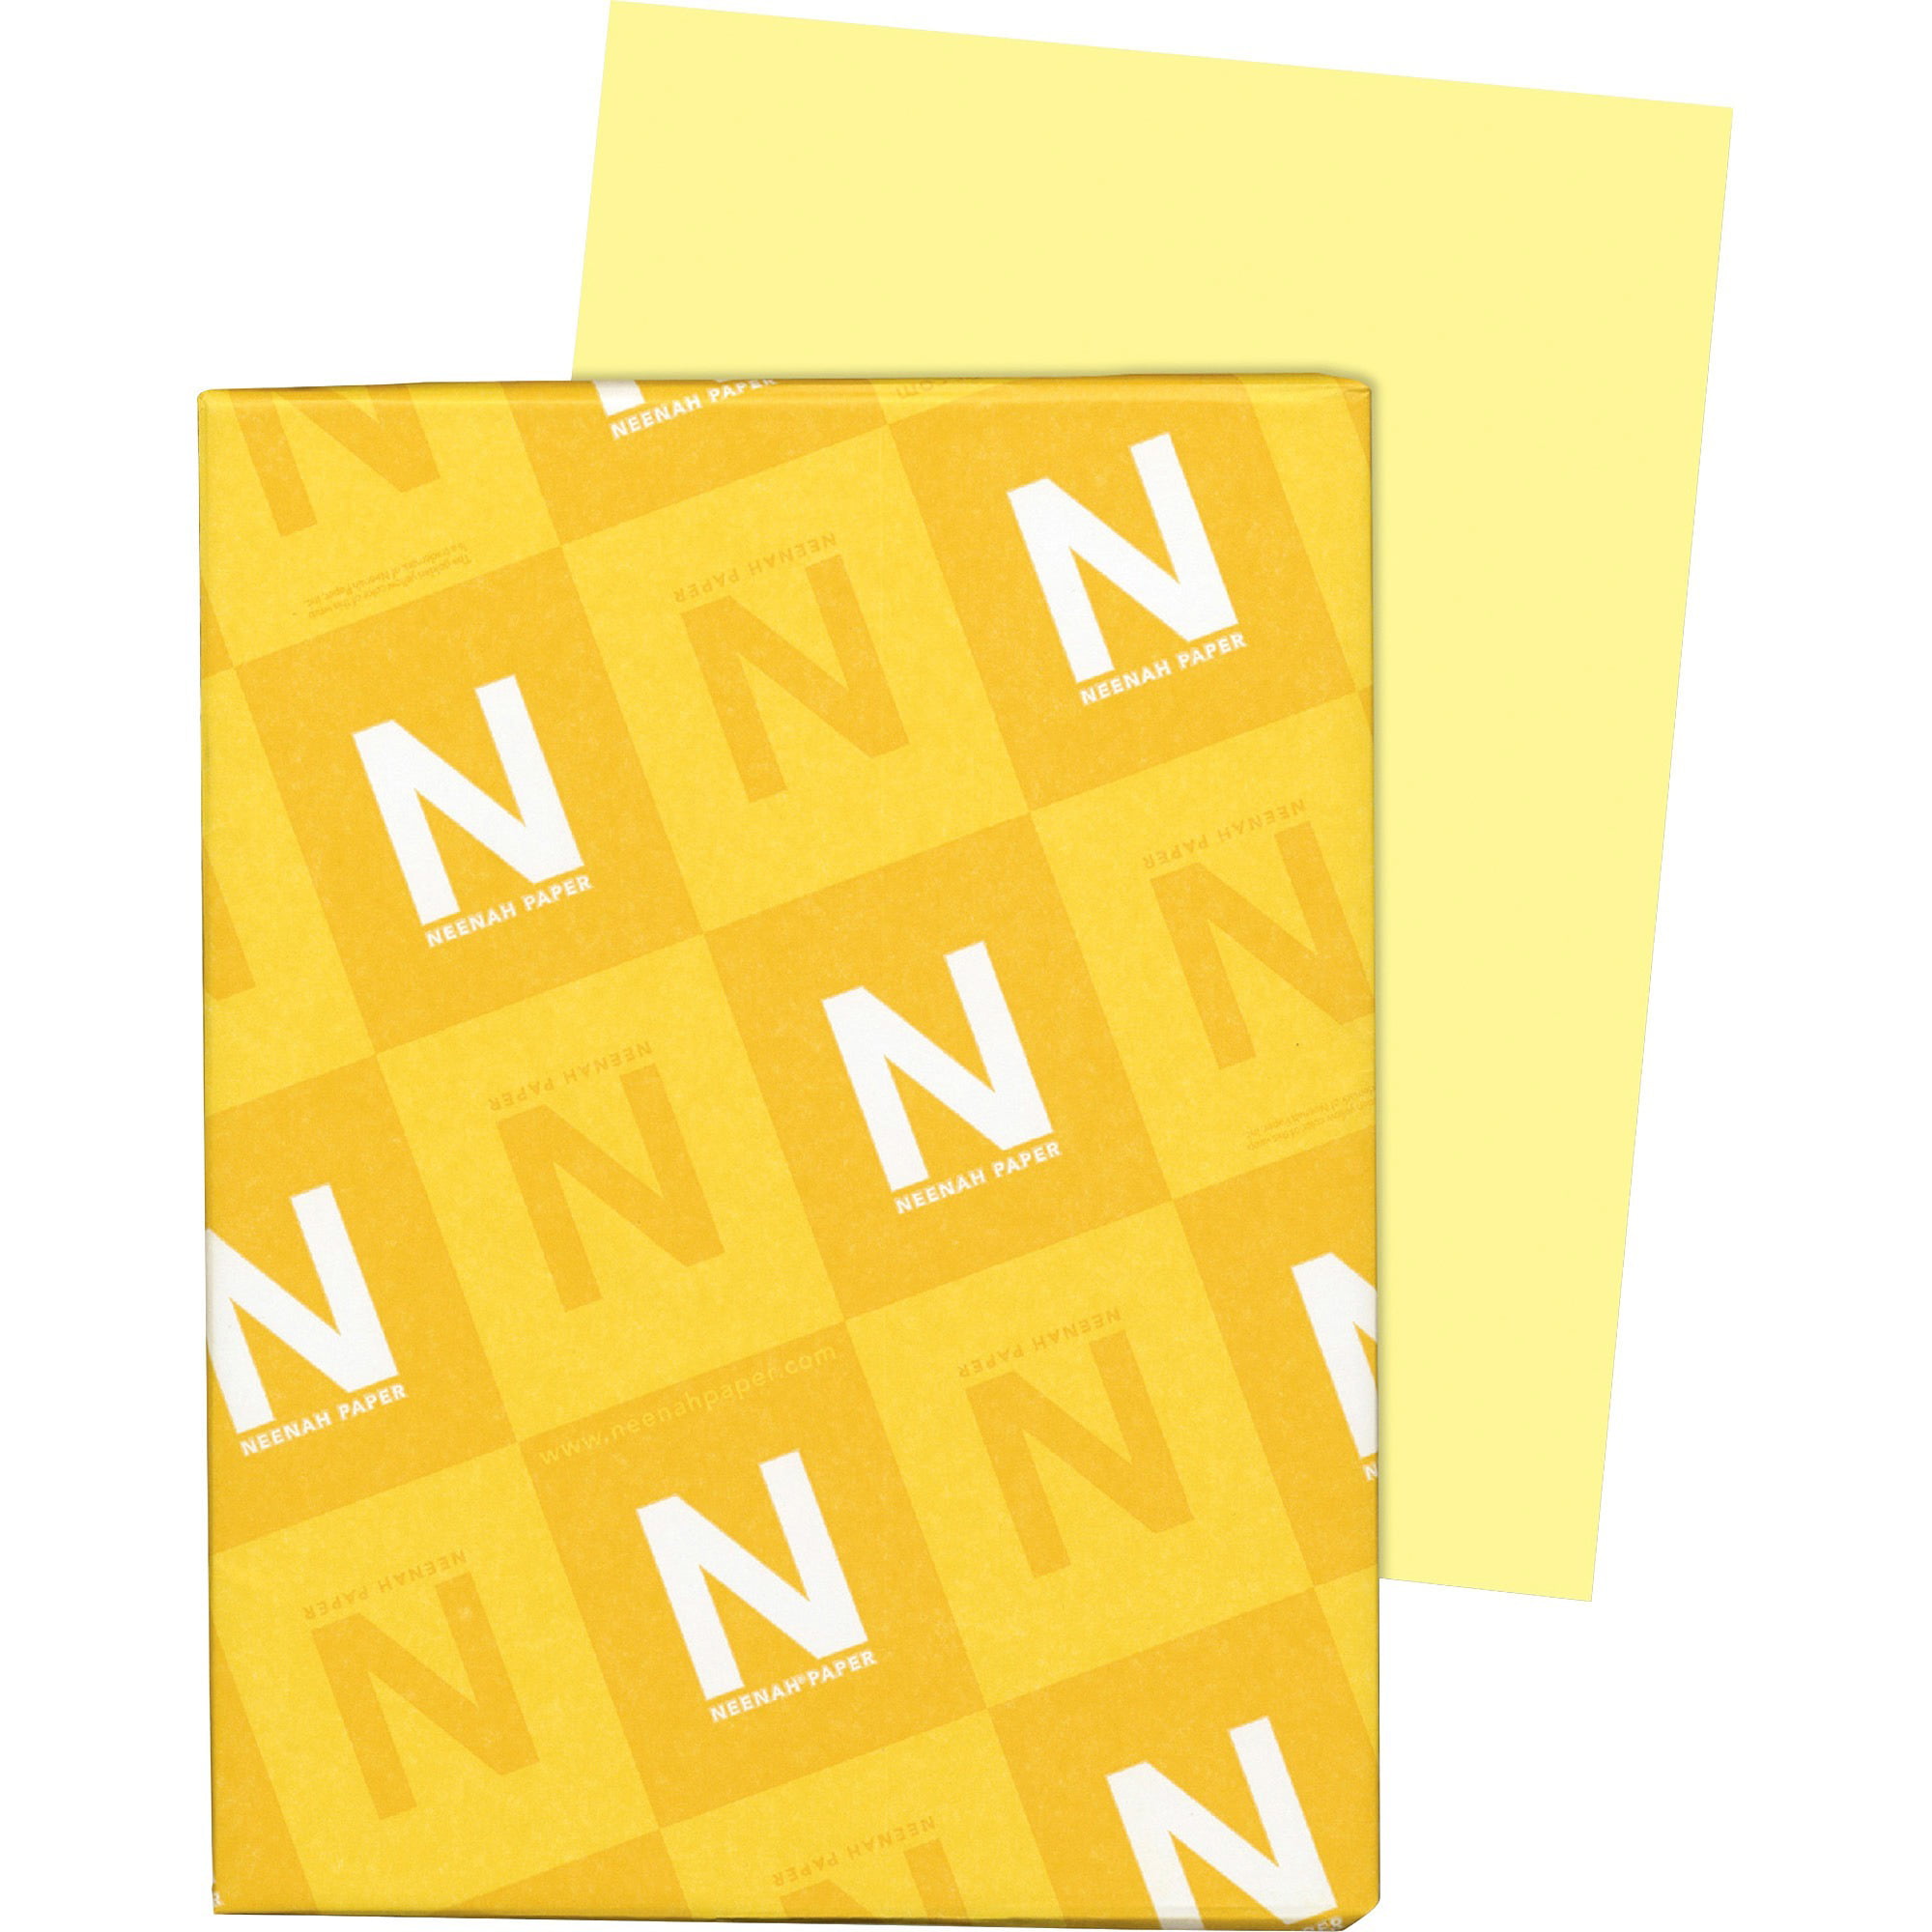 Neenah Wausau Index Card Stock 90 lb White Copy Paper 250 Sheets 